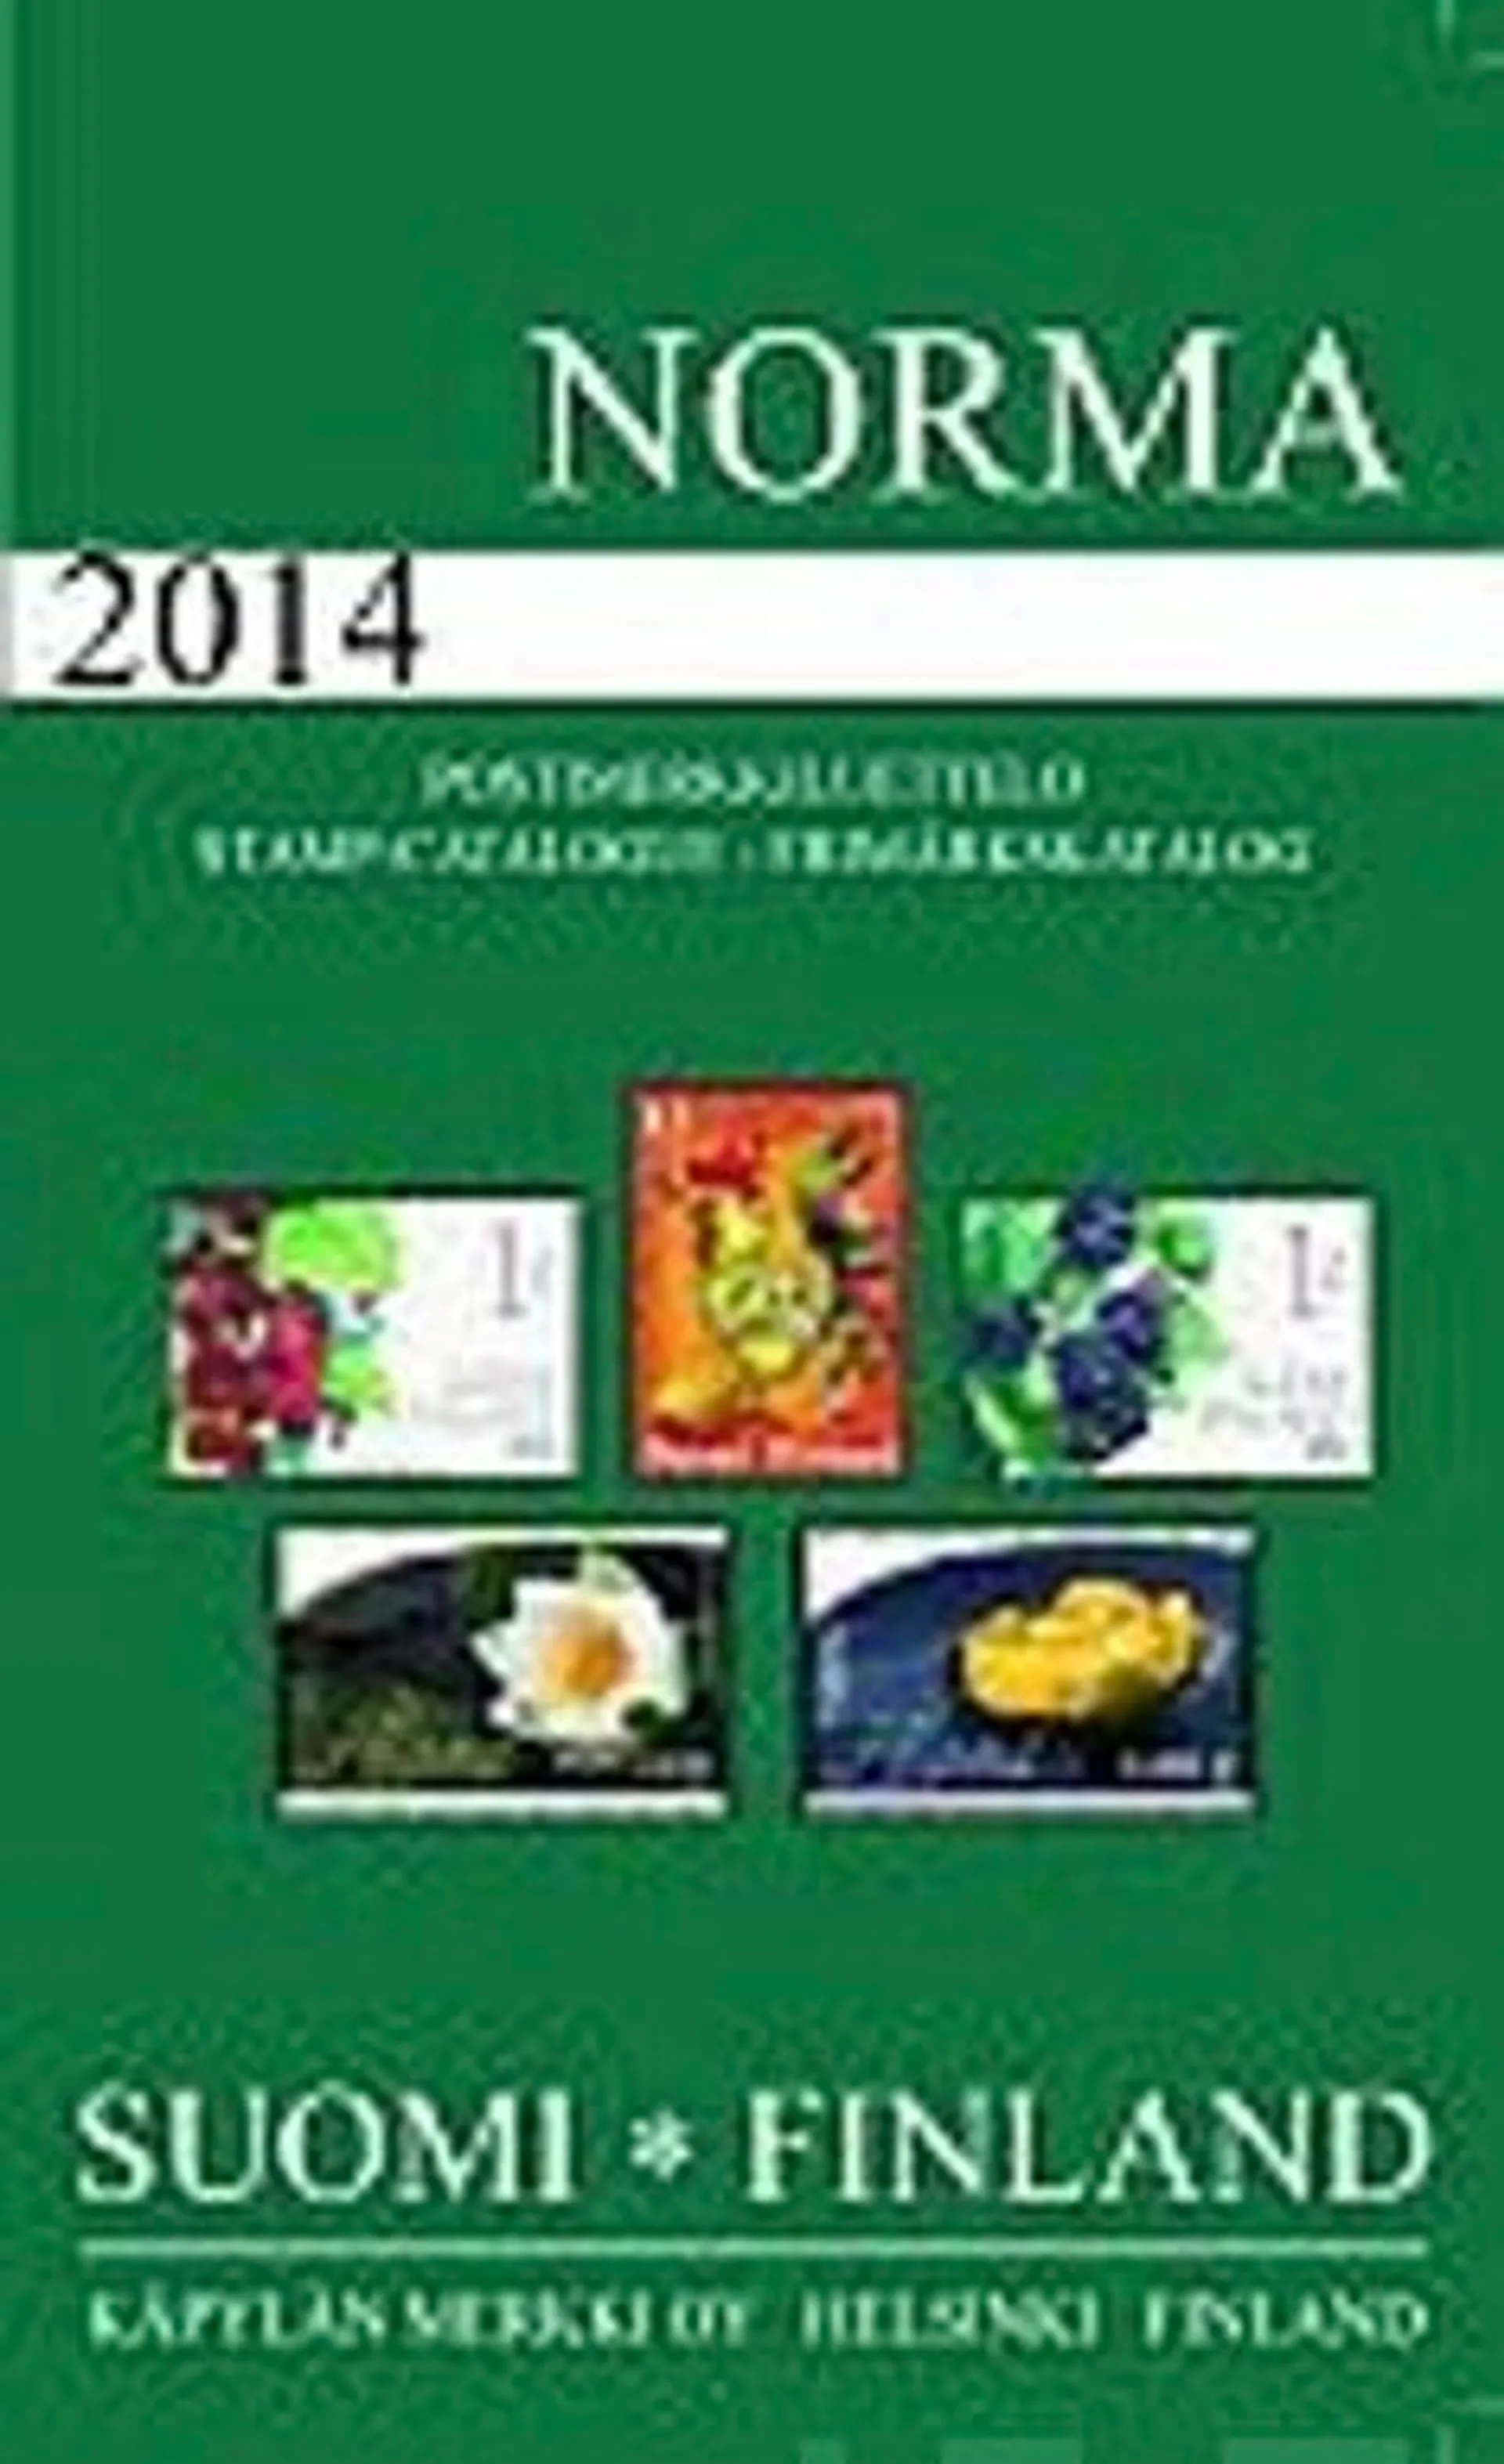 Norma 2014 (1856-2013) - Suomi luettelo - Finland katalog - Finland catalogue